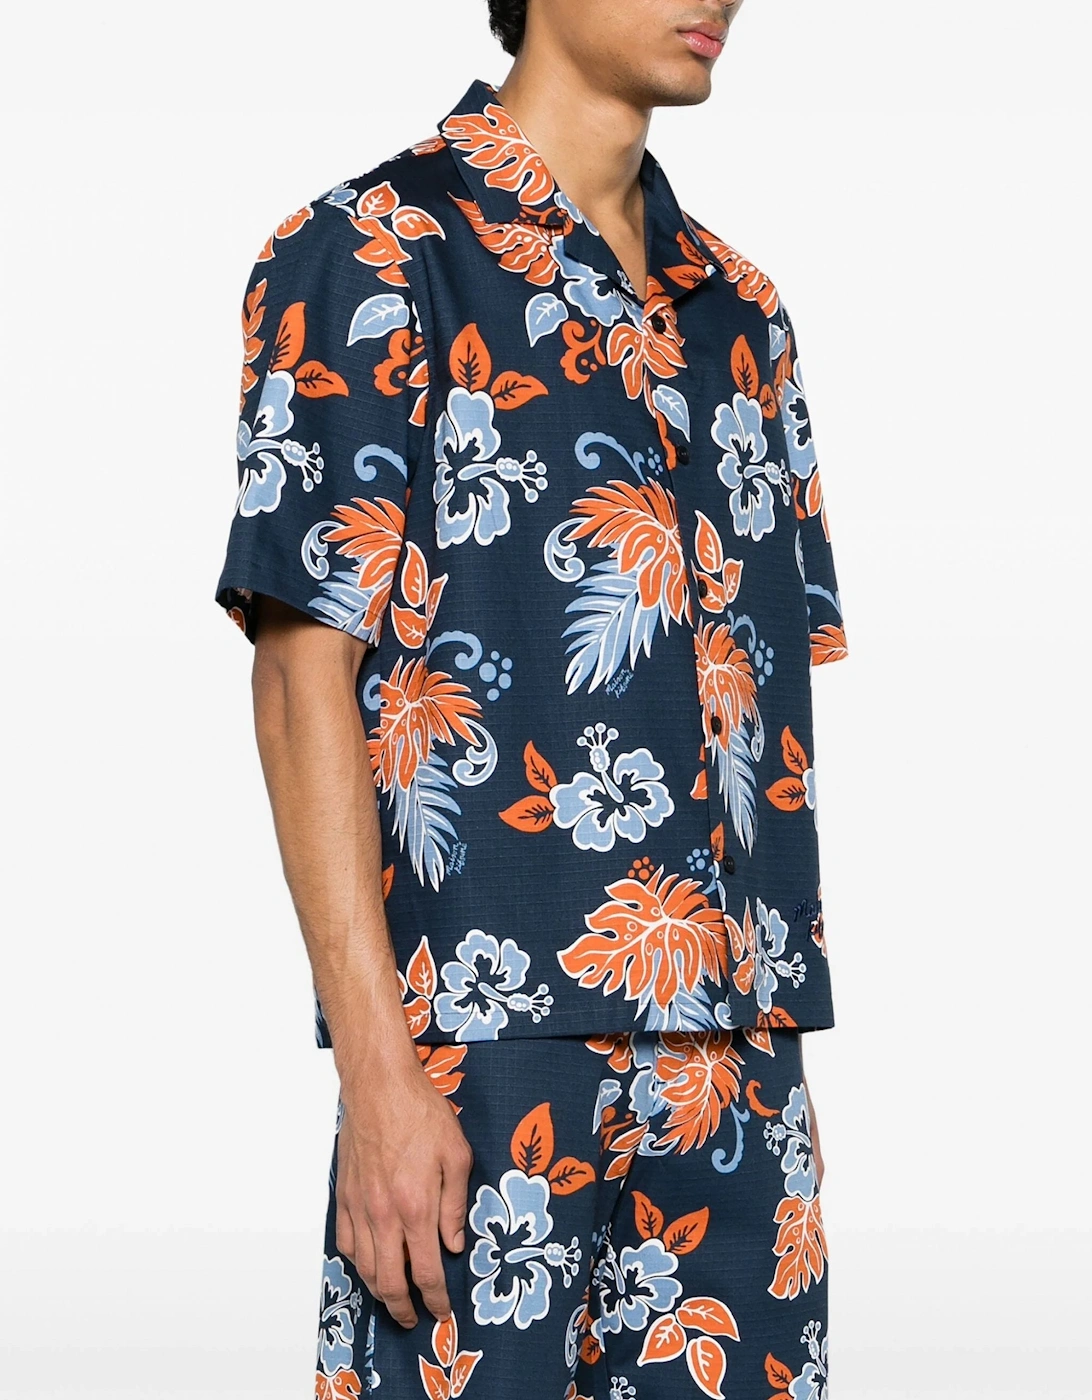 Floral Resort Shirt Navy